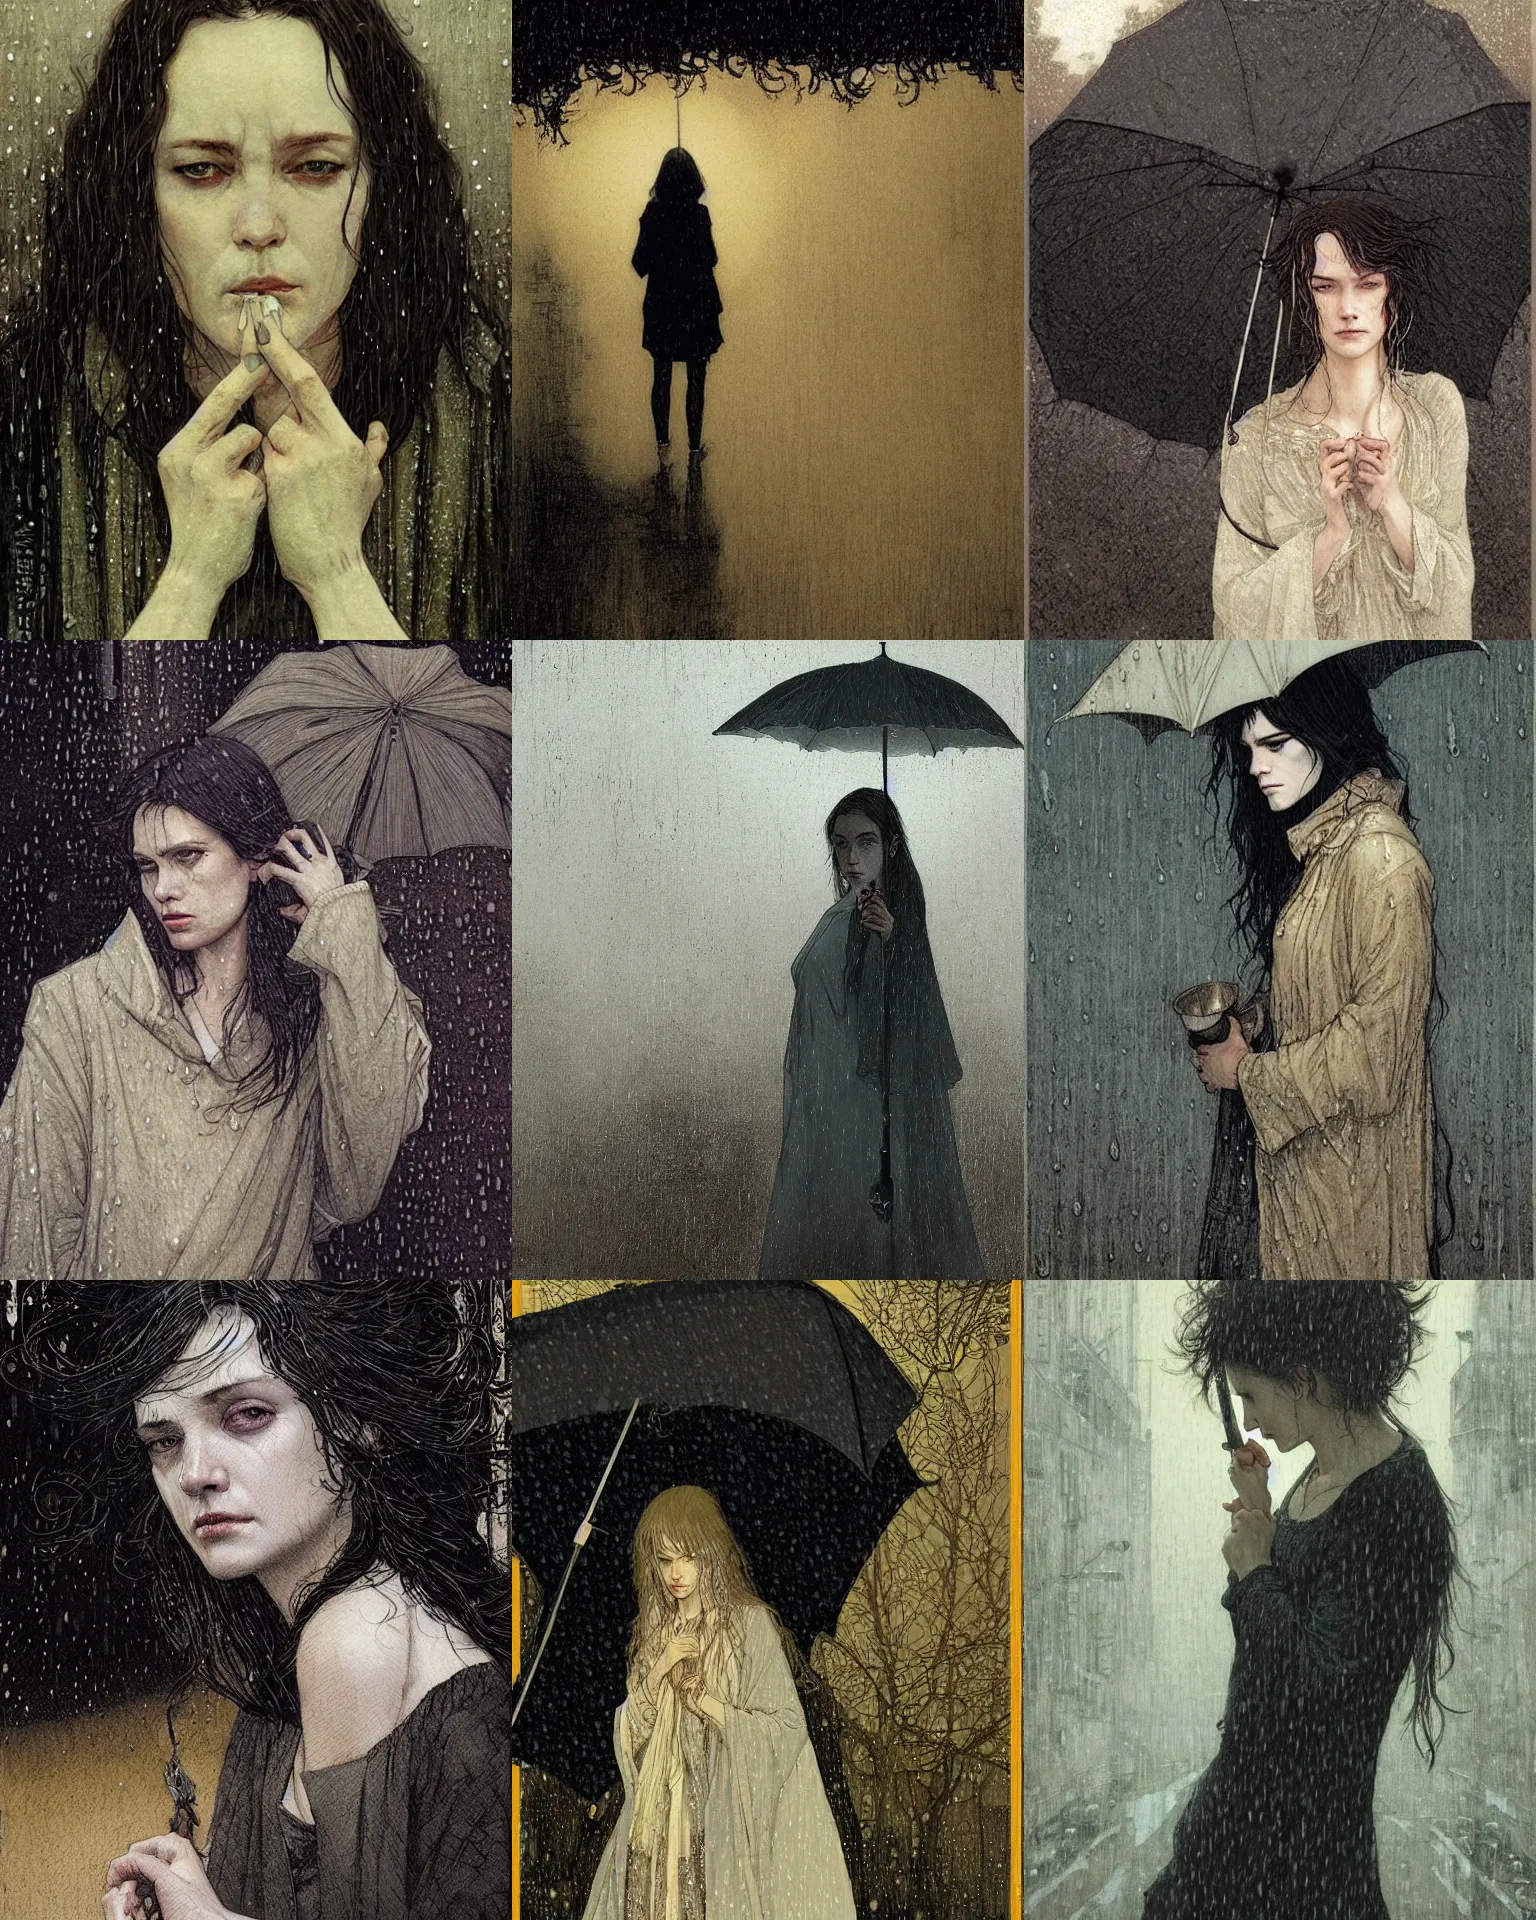 Prompt: portrait of a sad middle - aged woman, rain, street at night, melancholy, art by rebecca guay and greg rutkowski